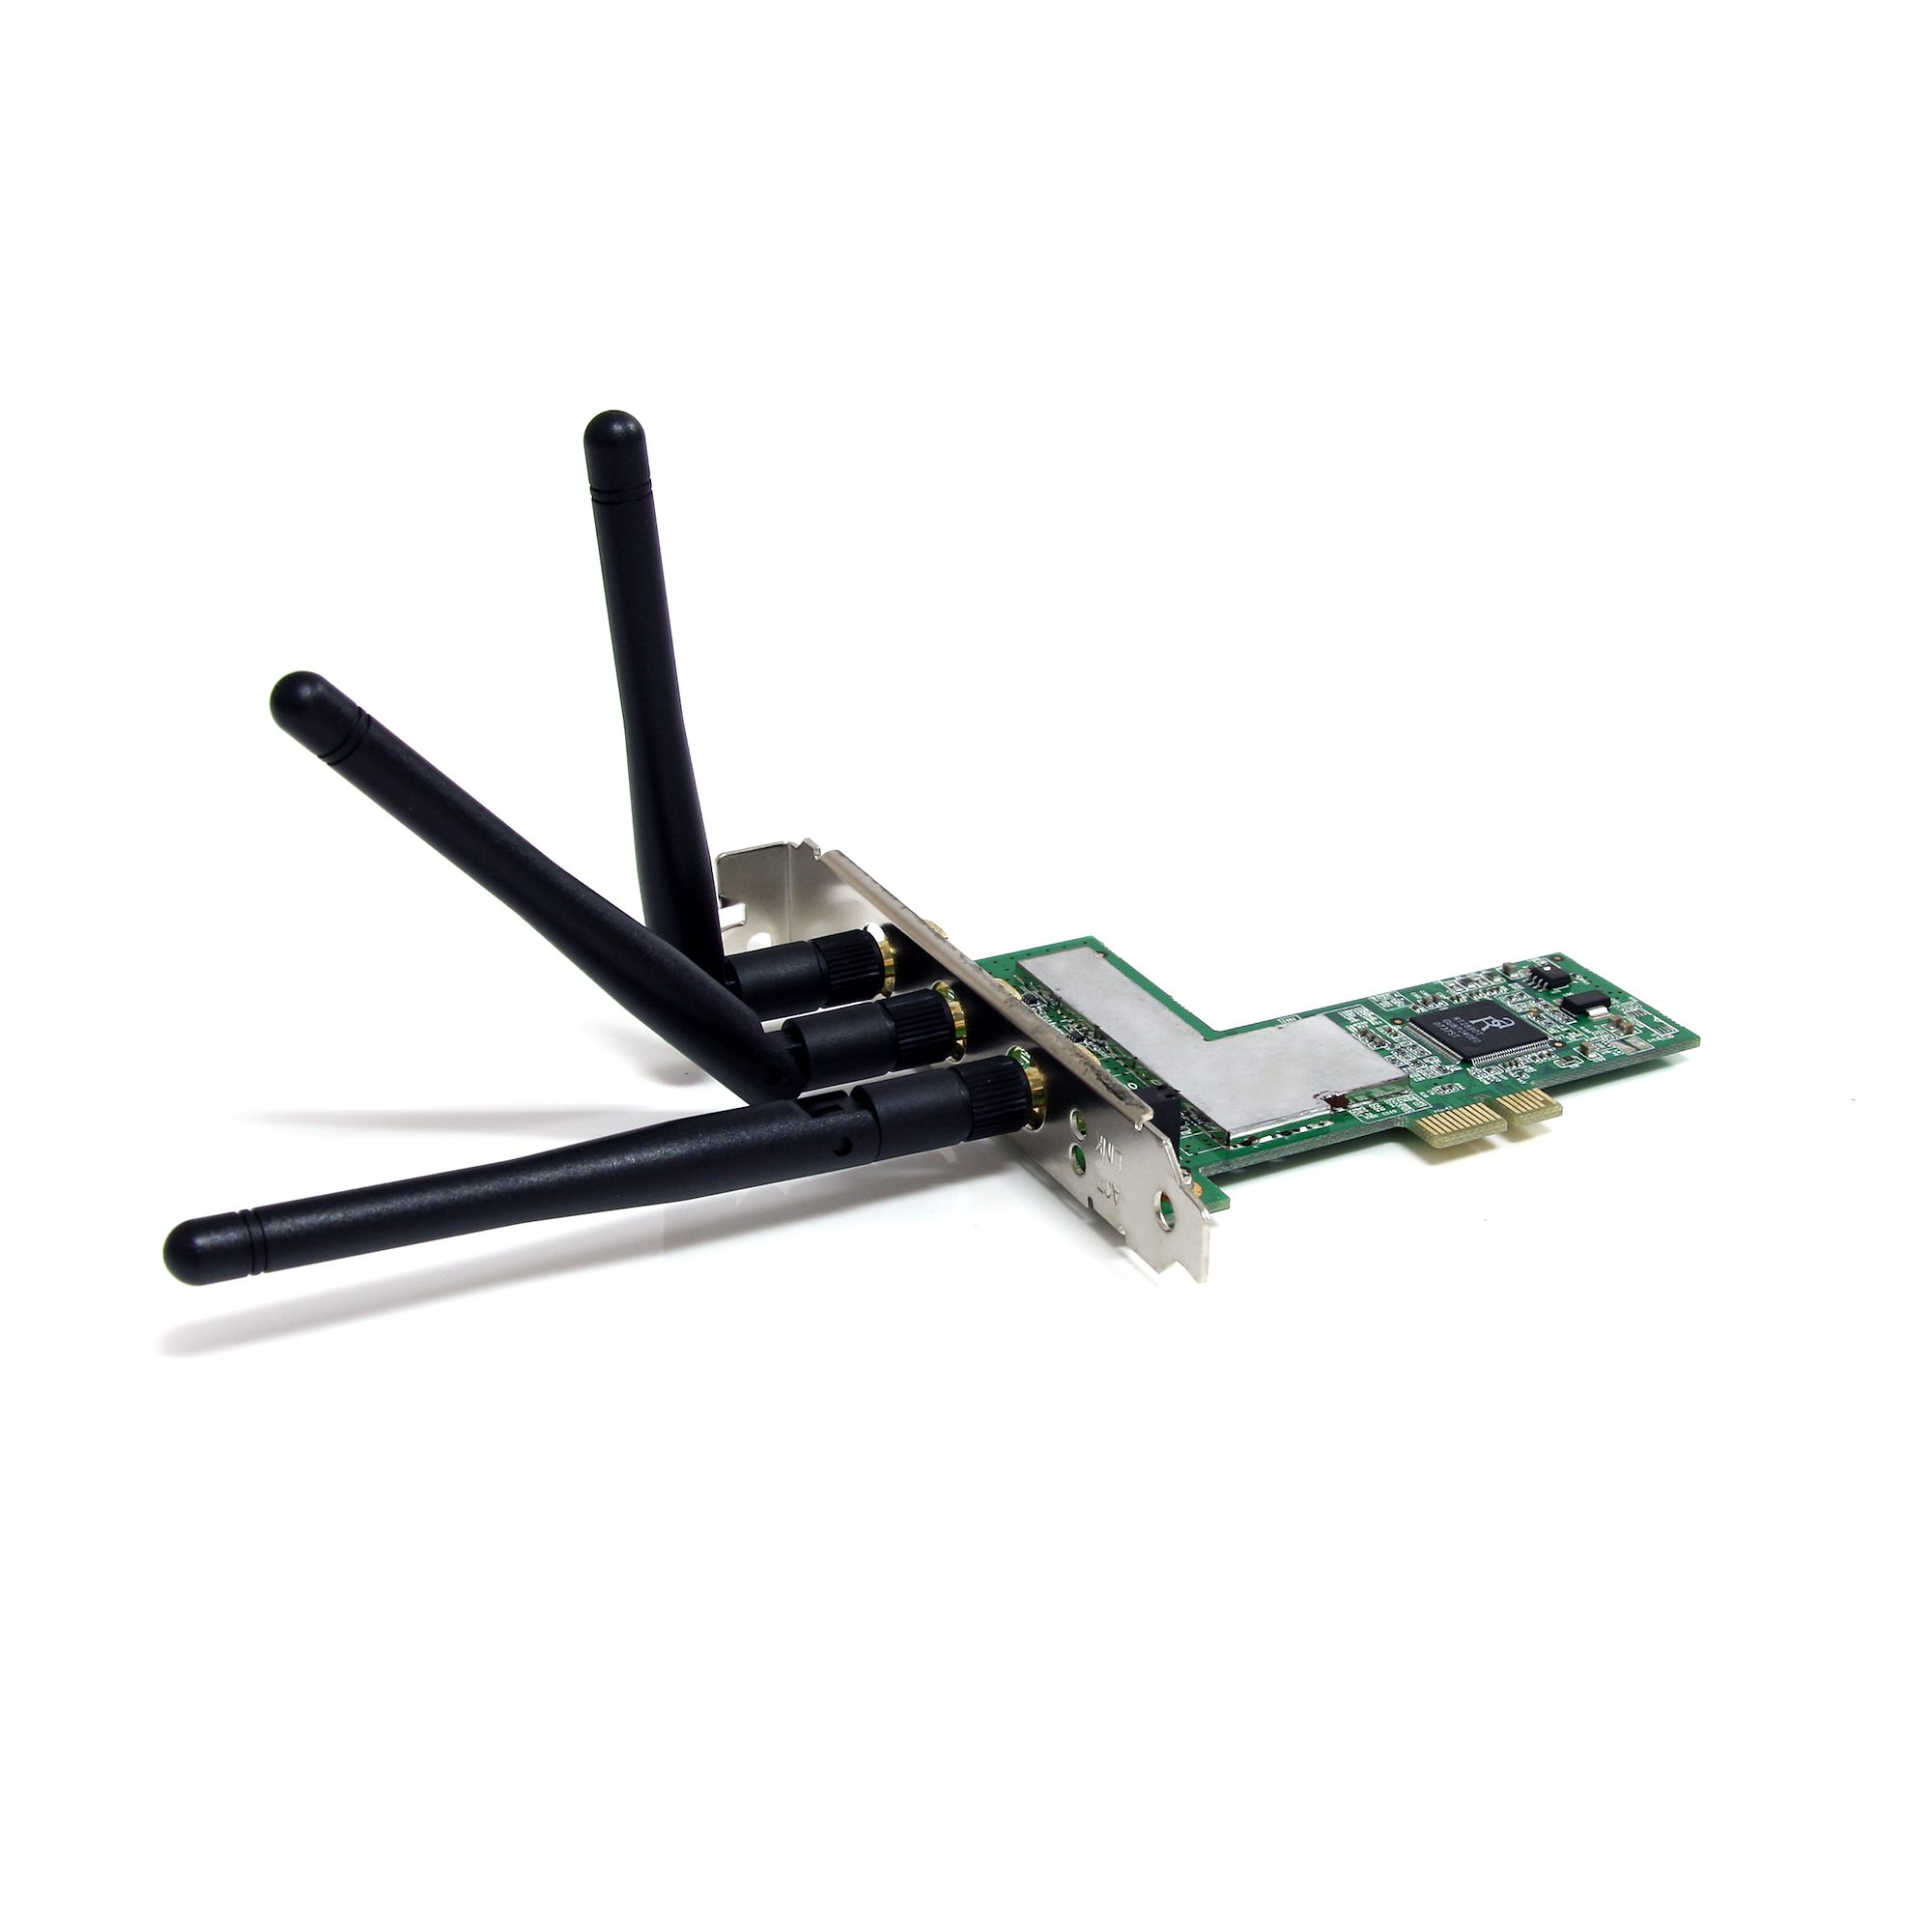 Adapter broadcom 802.11 n. 802.11N USB Wireless lan Card. Ralink 802.11n USB Wireless lan Card. PCIE lan 802.11n. 300mbps Wireless 802.11n PCI Adapter.